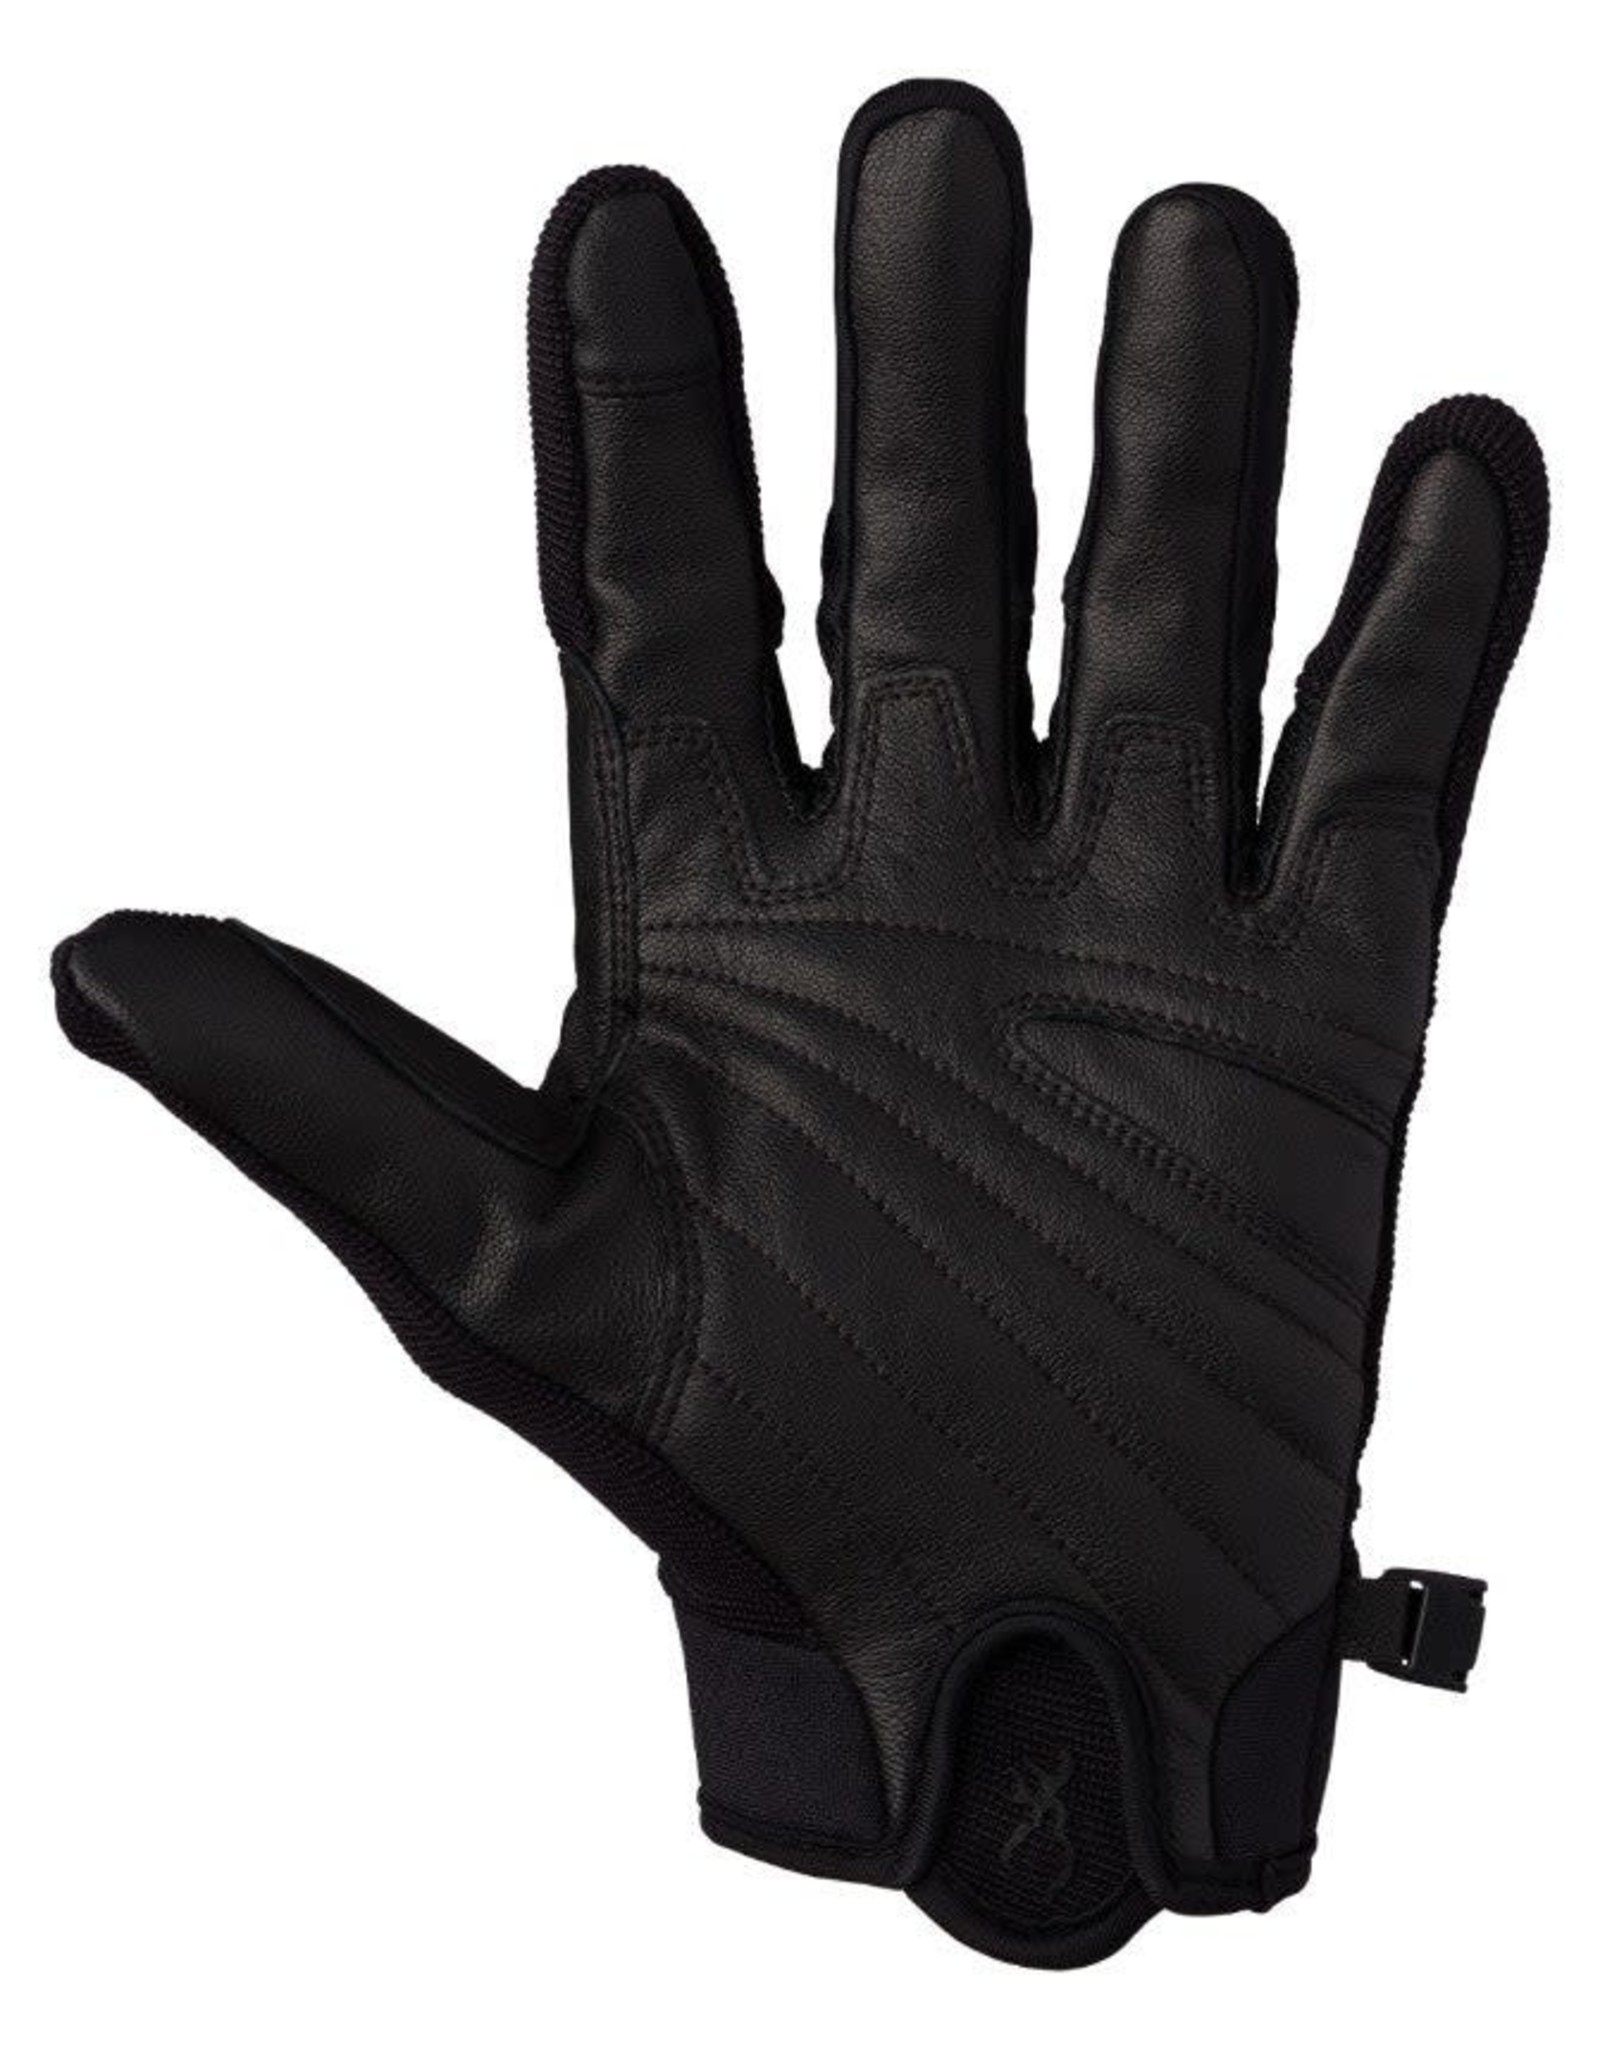 Browning Ace Shooting Glove - Black/Black - Medium